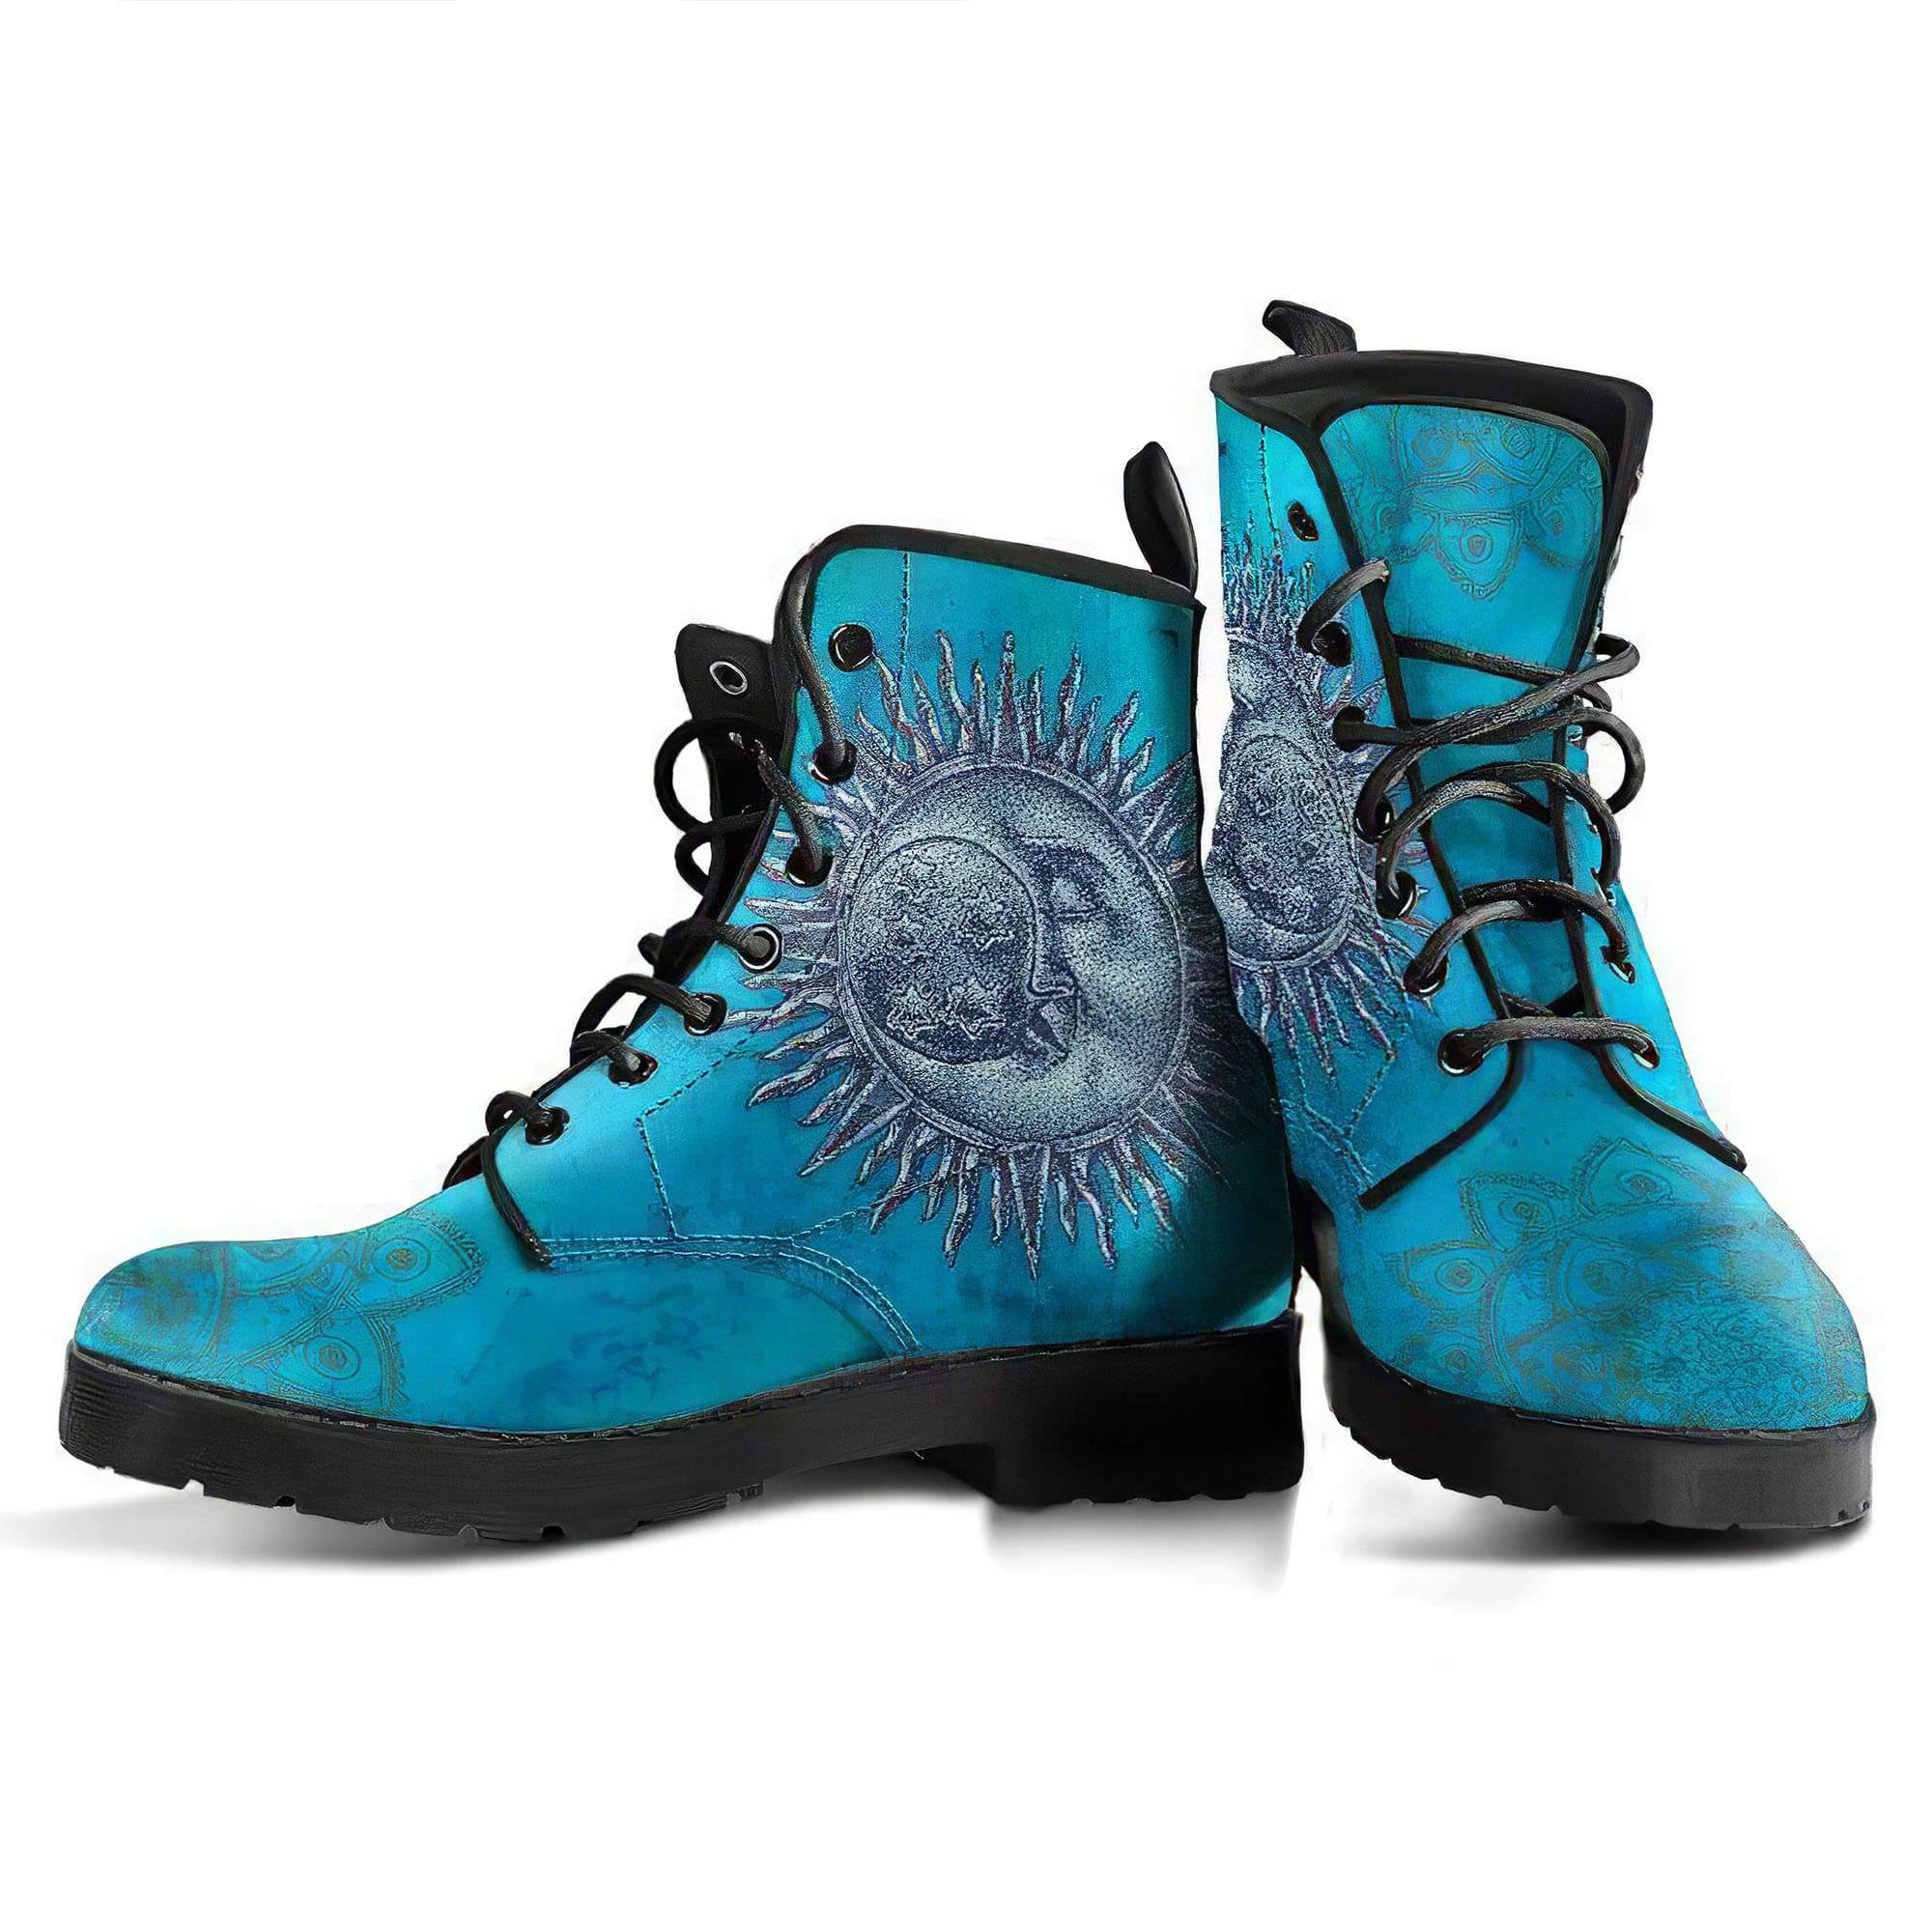 sun-moon-v3-women-s-boots-vegan-friendly-leather-women-s-leather-boots-12051962757181.jpg